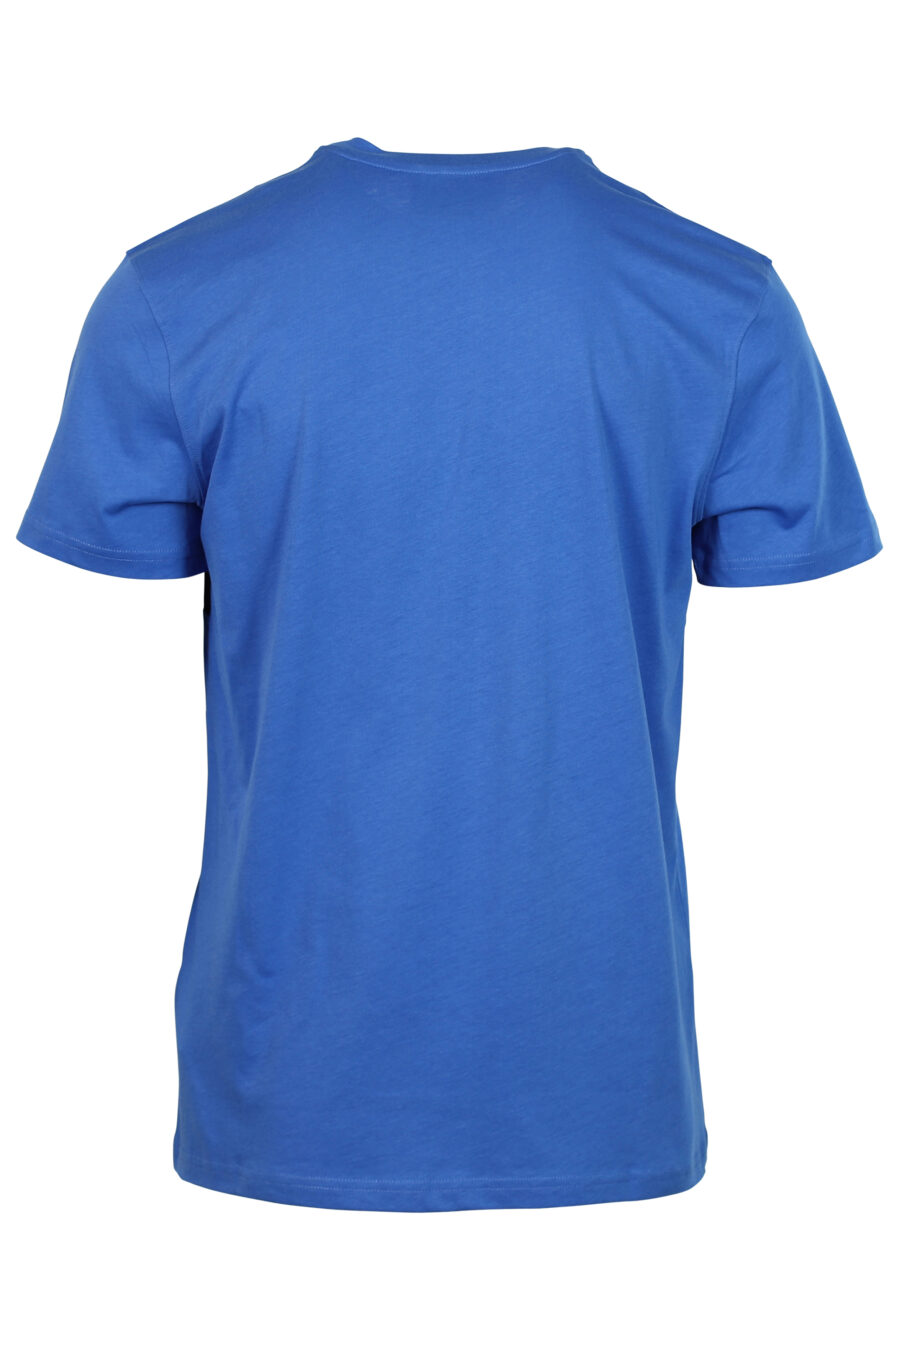 Camiseta azul con logo franja negro - 667112834116 2